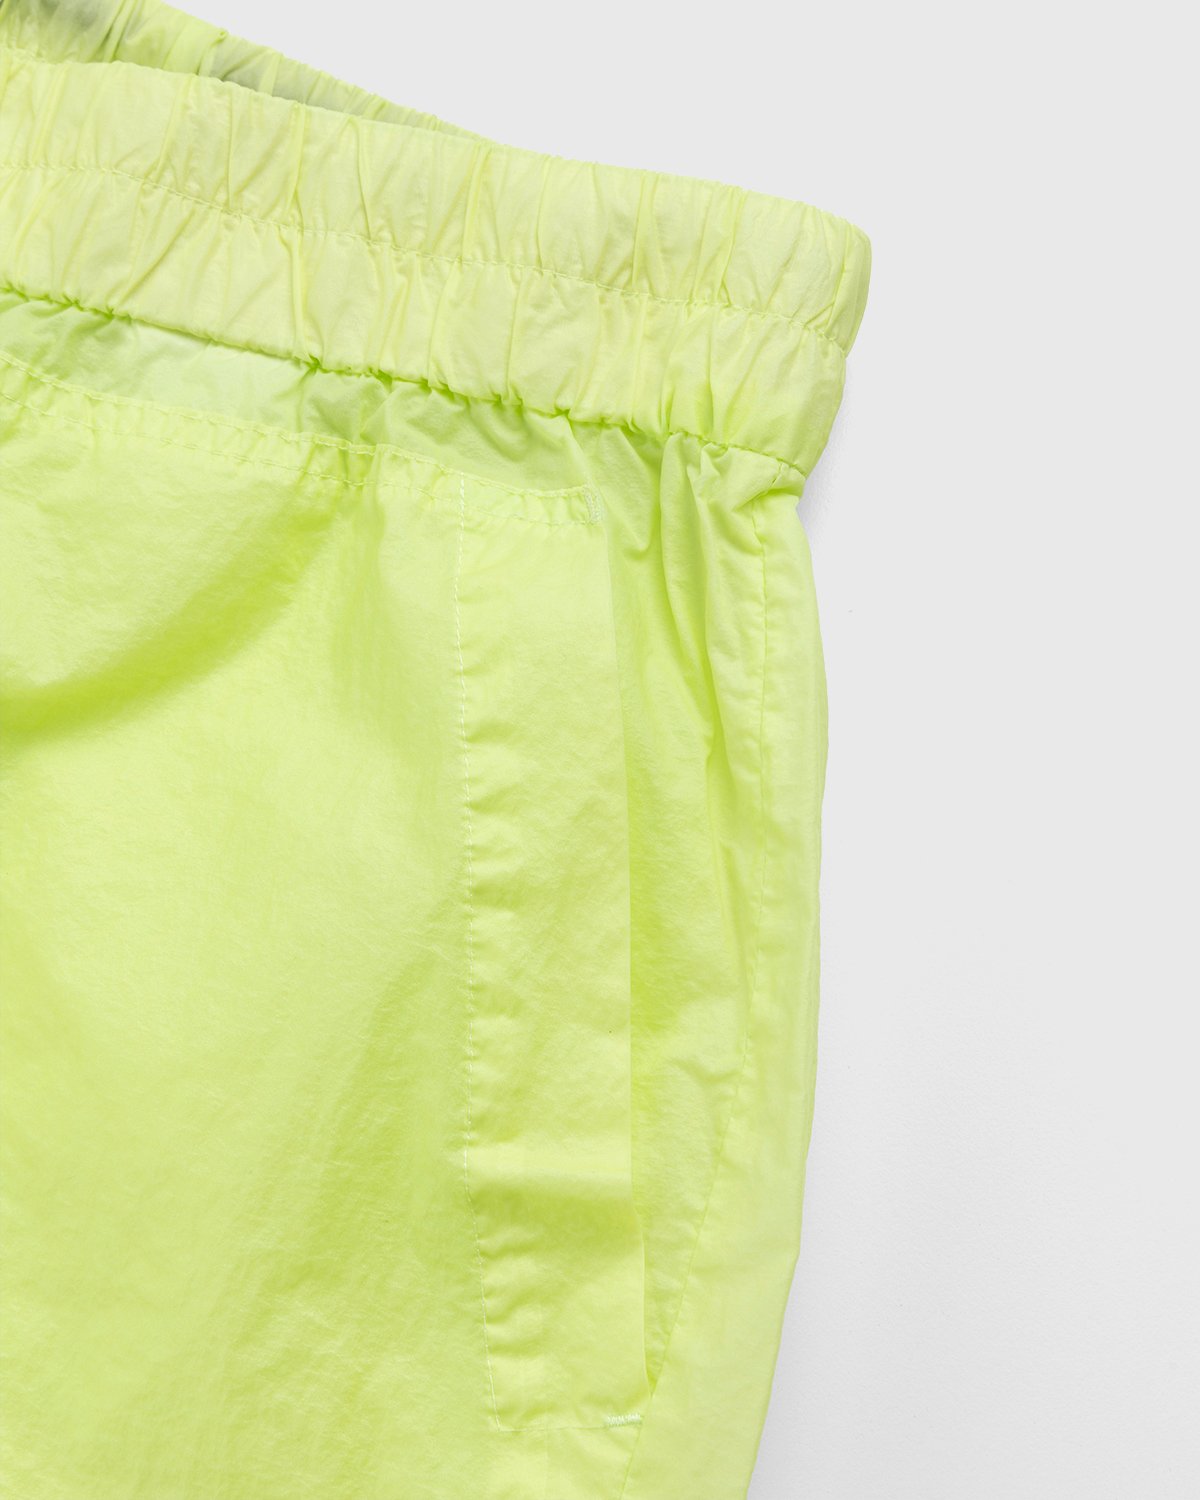 Dries van Noten - Pooles Shorts Lime - Clothing - Green - Image 4